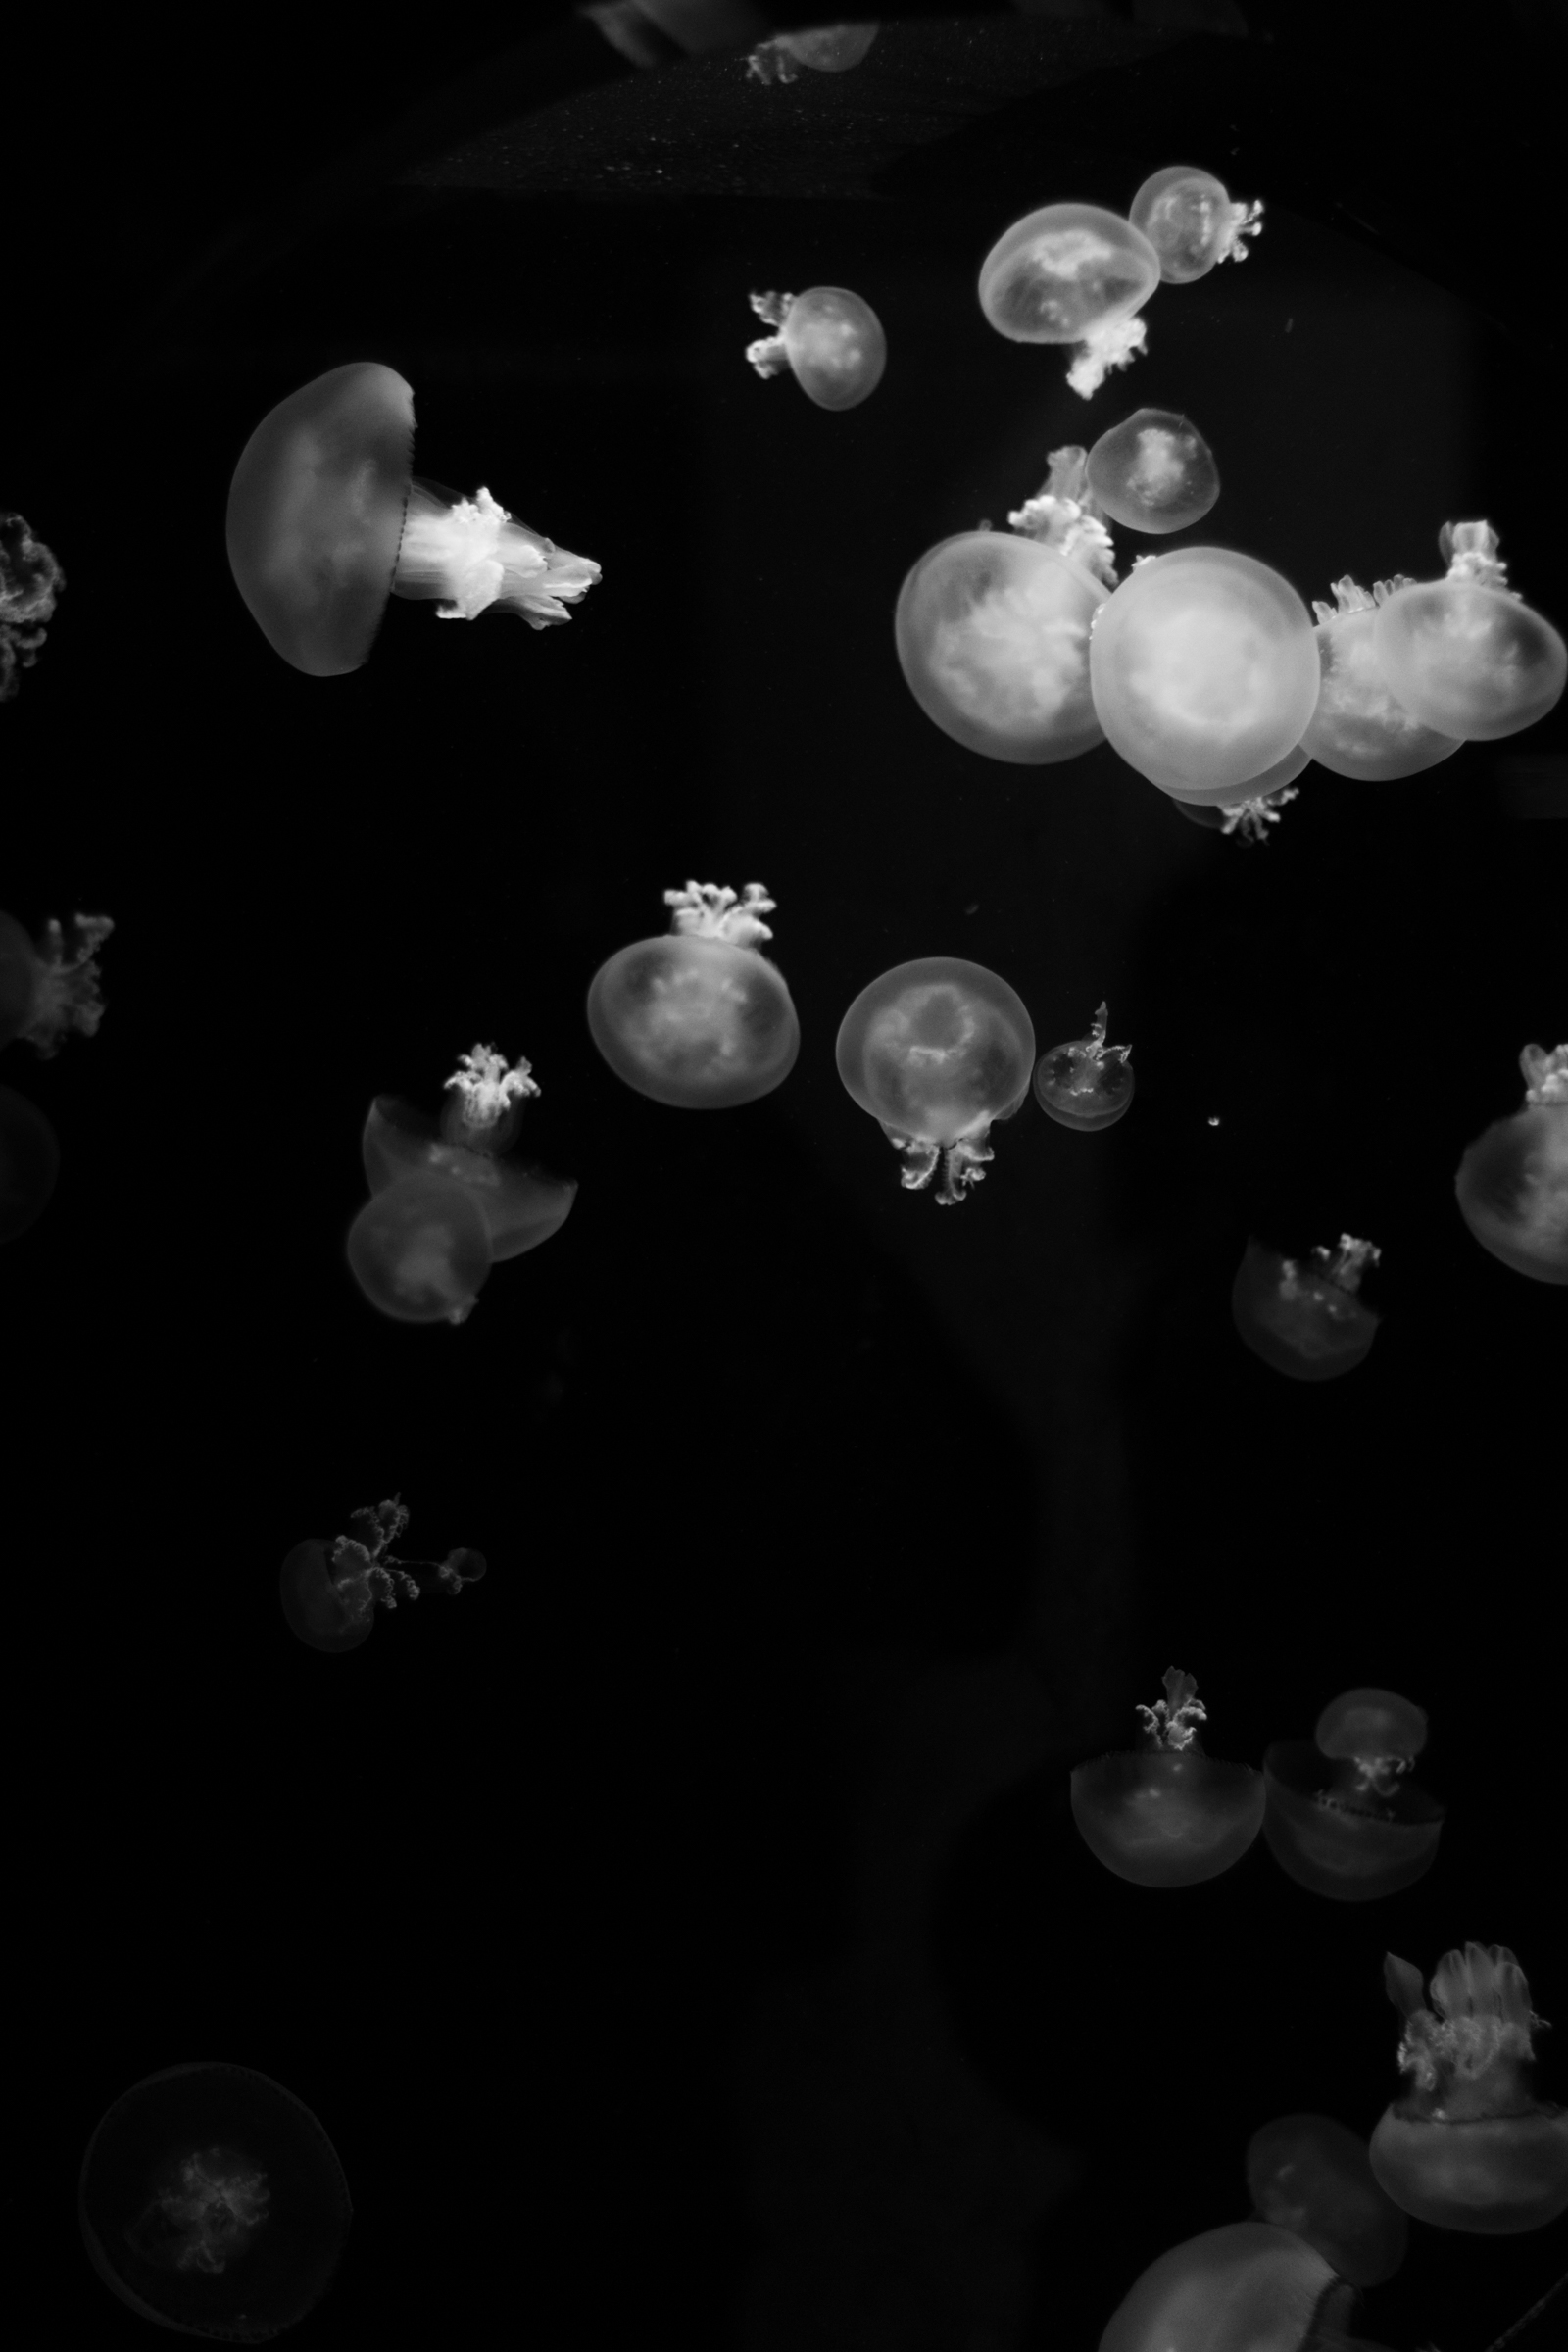 Bored jellyfish...